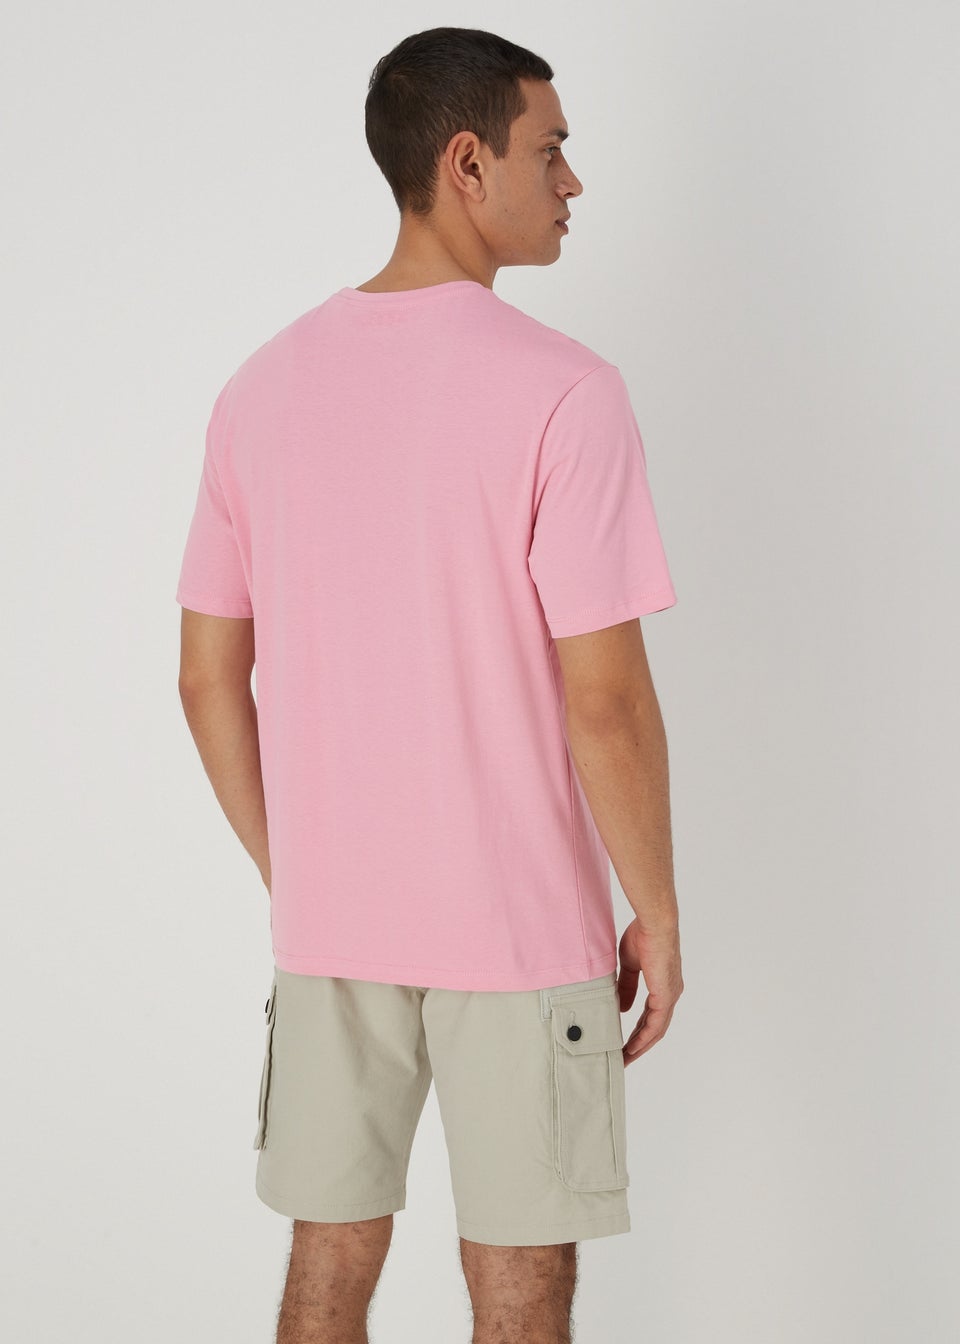 Pale Pink Crew Neck T-Shirt